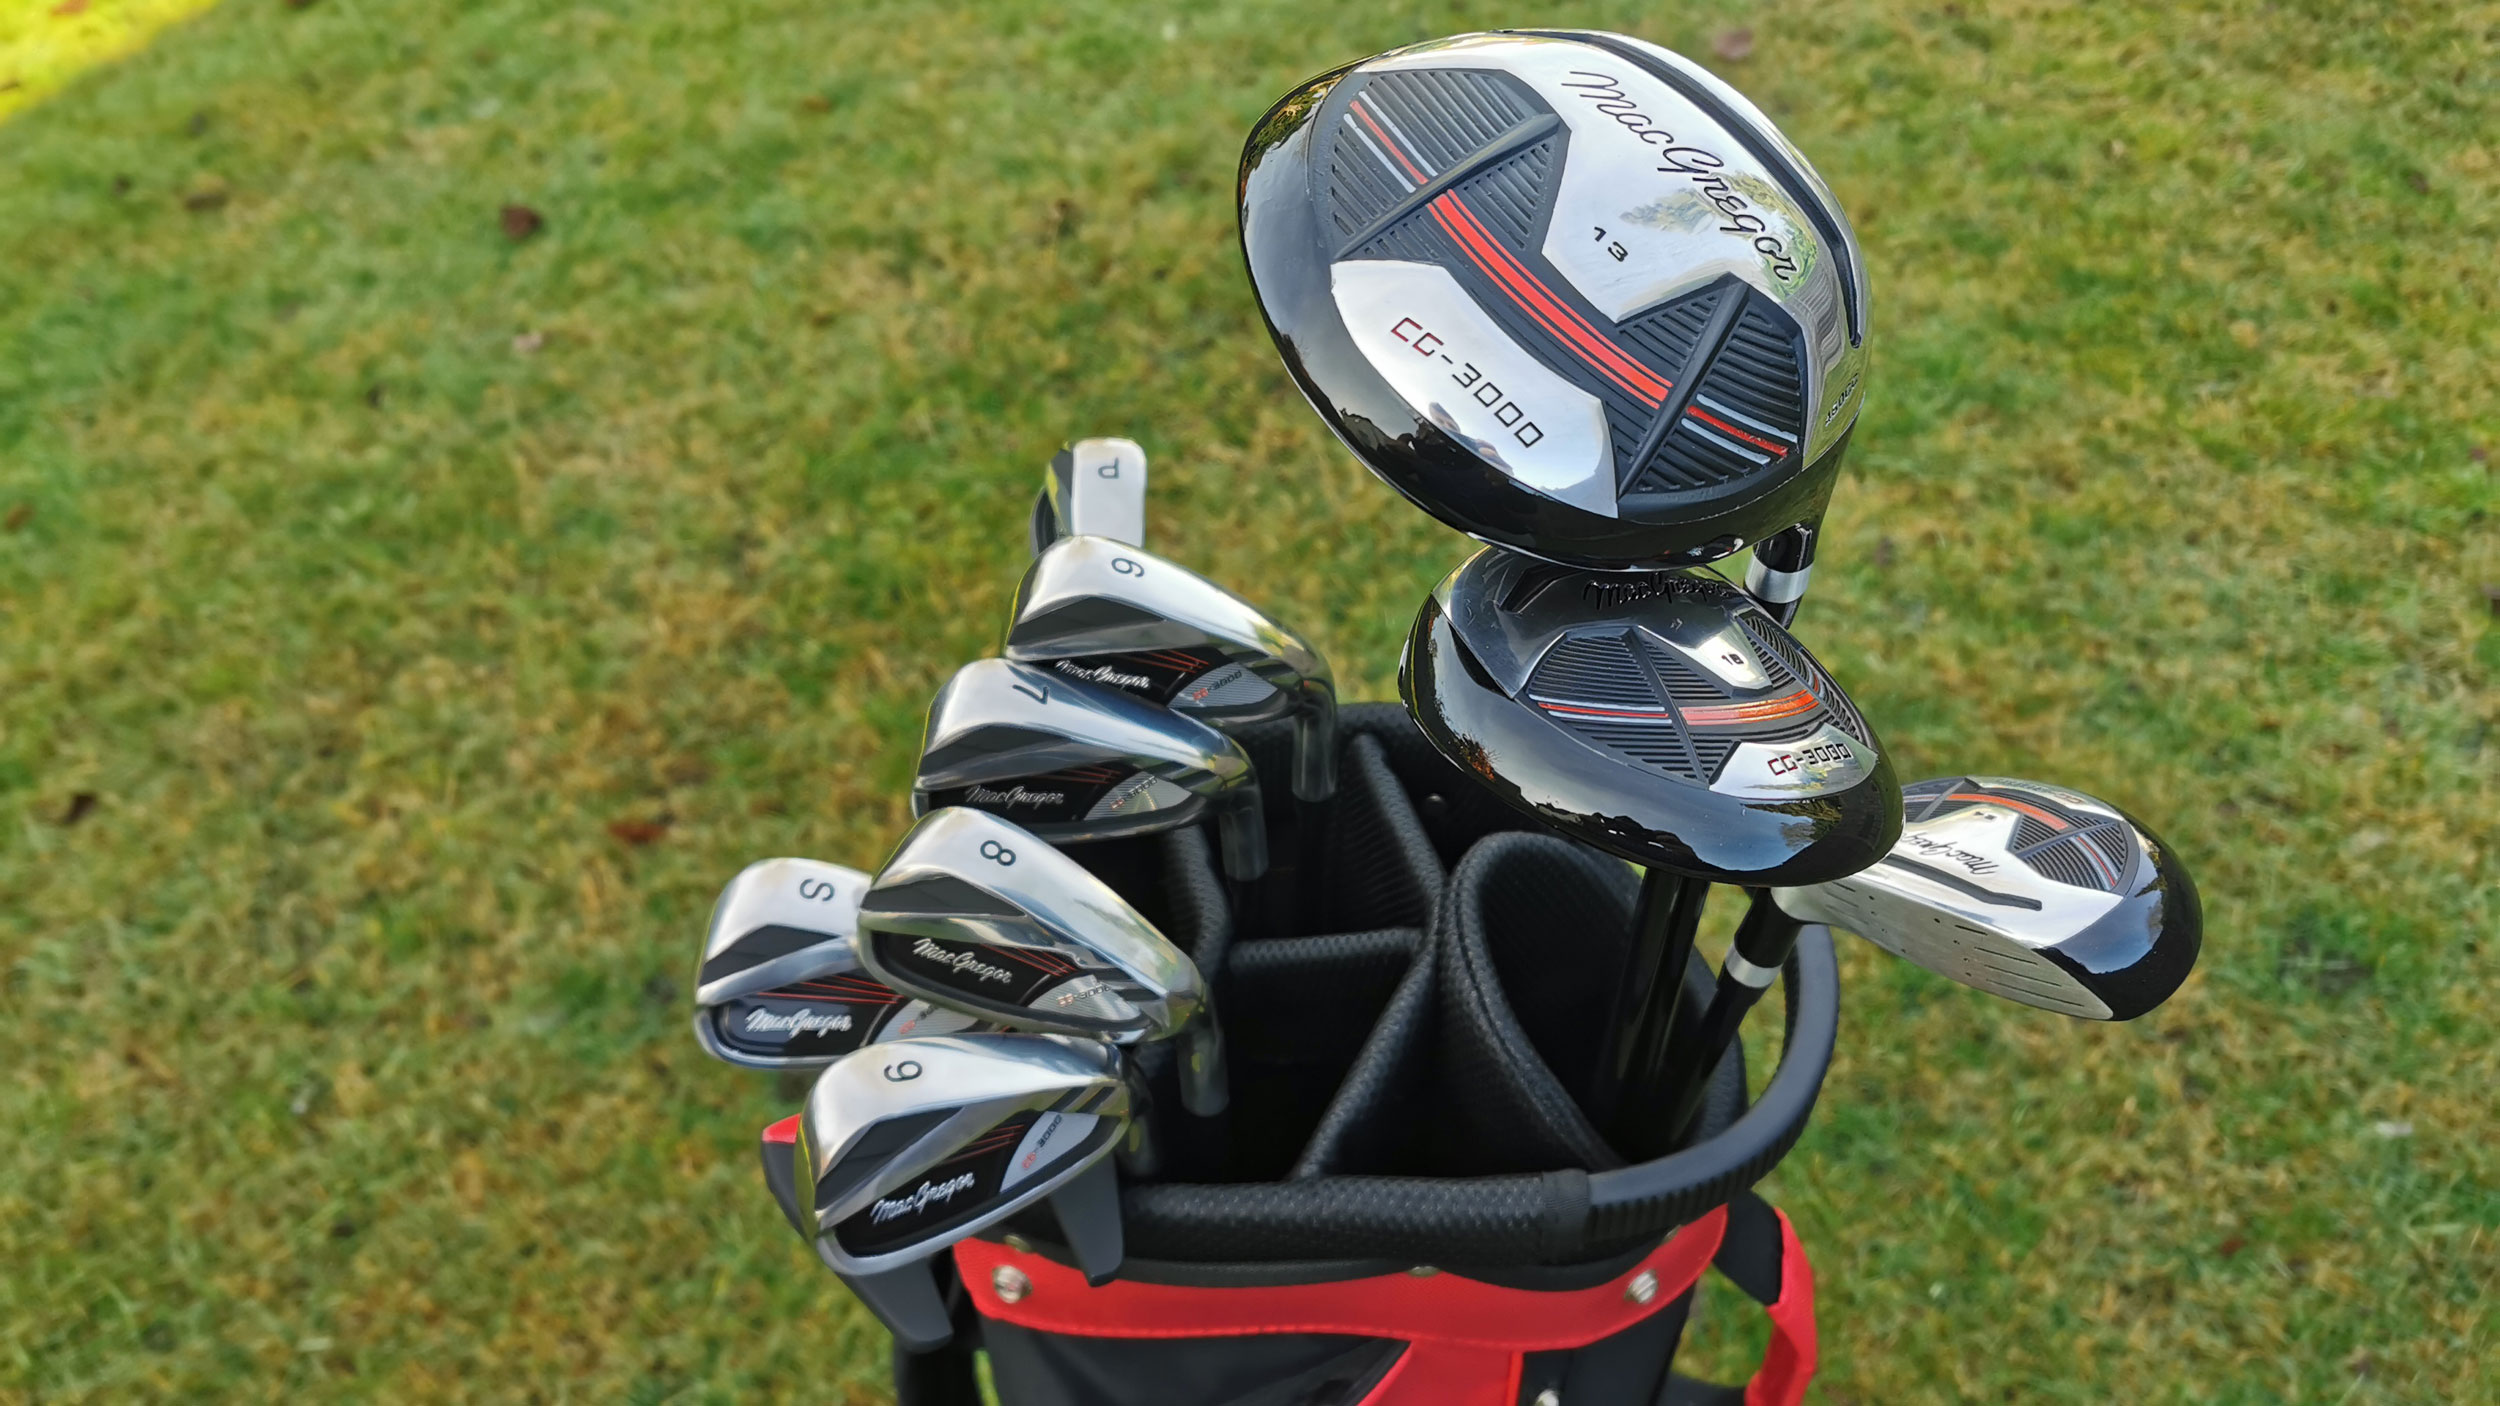 Macgregor Golf CG3000 Golf Clubs Set with Bag, Mens Left Hand, All Graphite